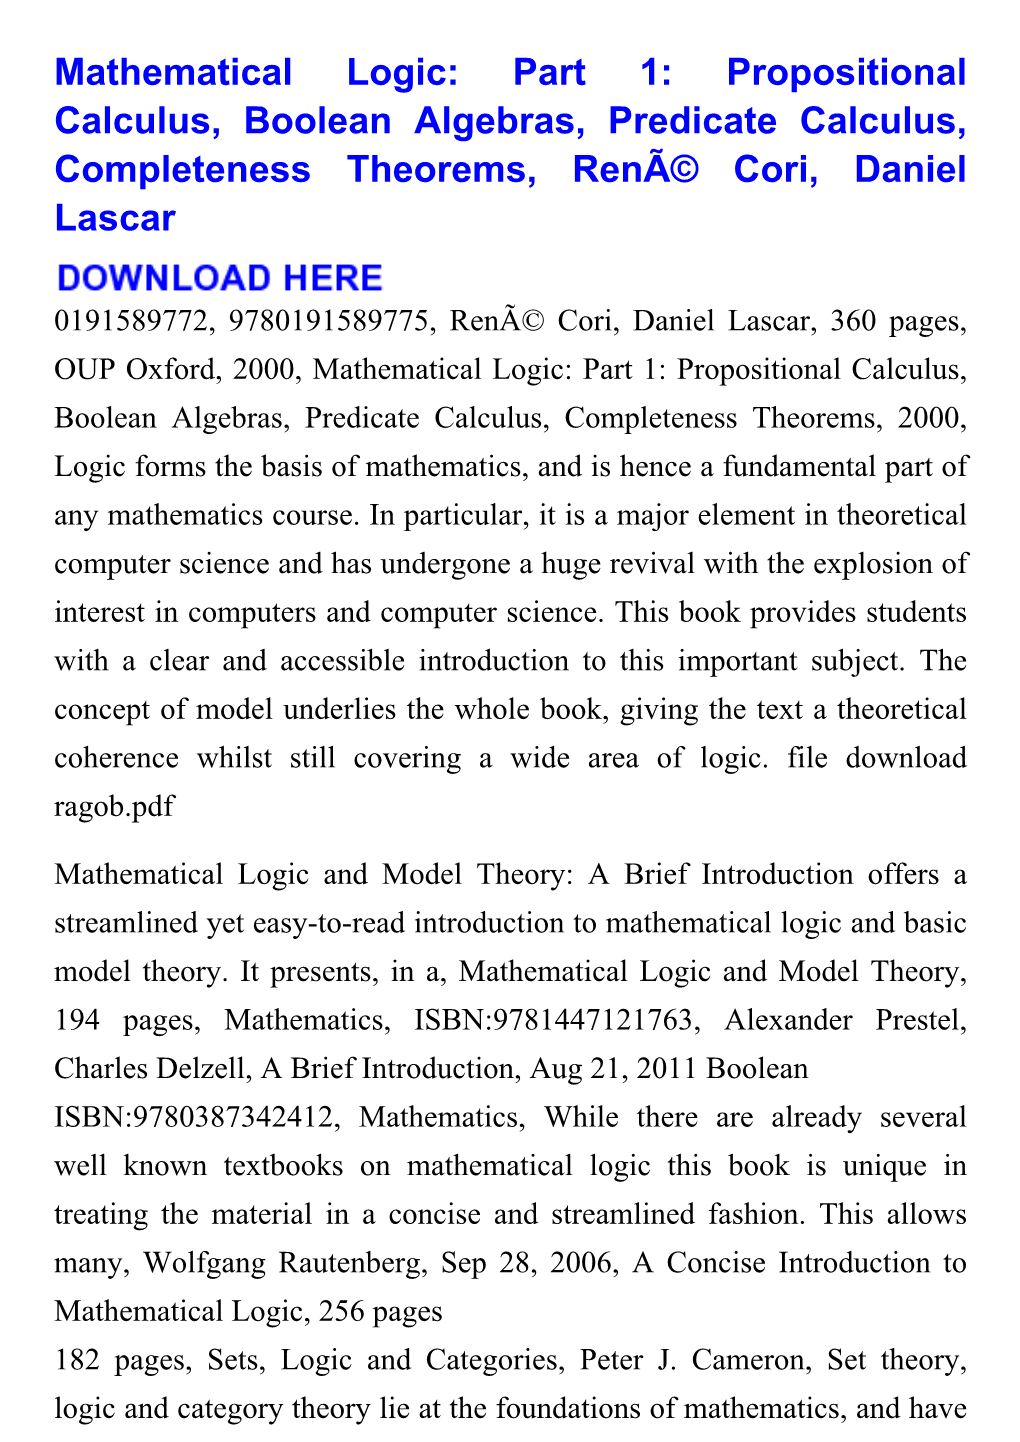 Mathematical Logic: Part 1: Propositional Calculus, Boolean Algebras, Predicate Calculus, Completeness Theorems, Renã© Cori, Daniel Lascar